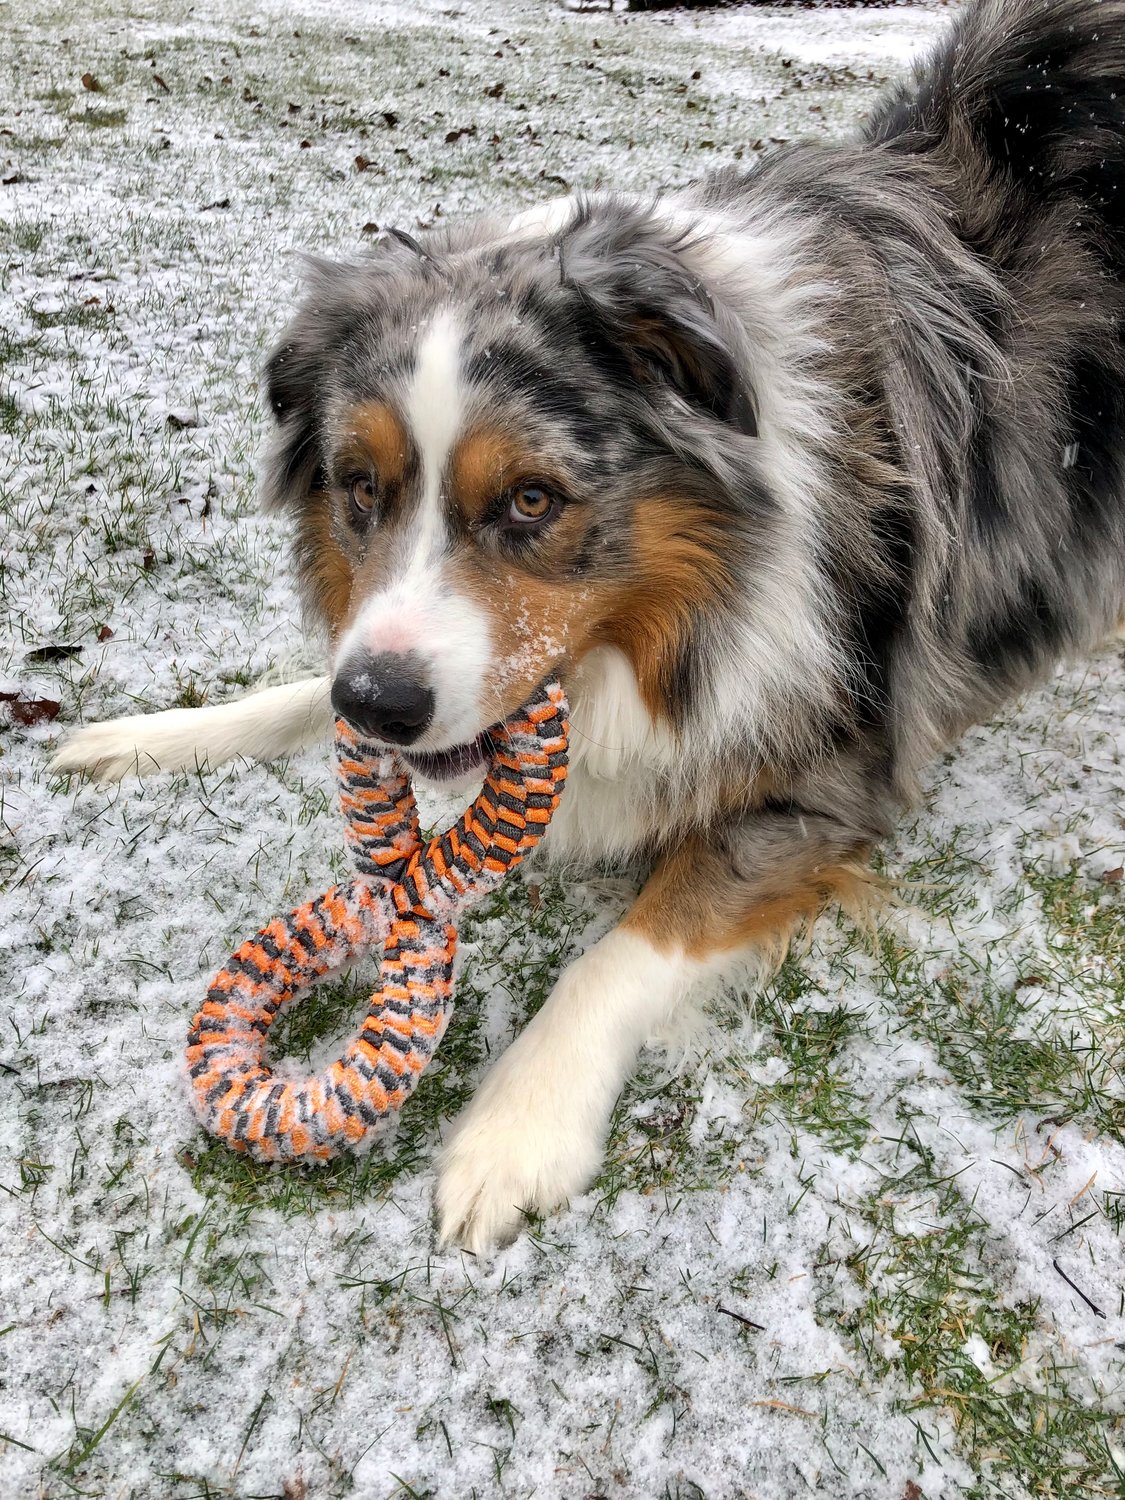 Finn plays in the snow.